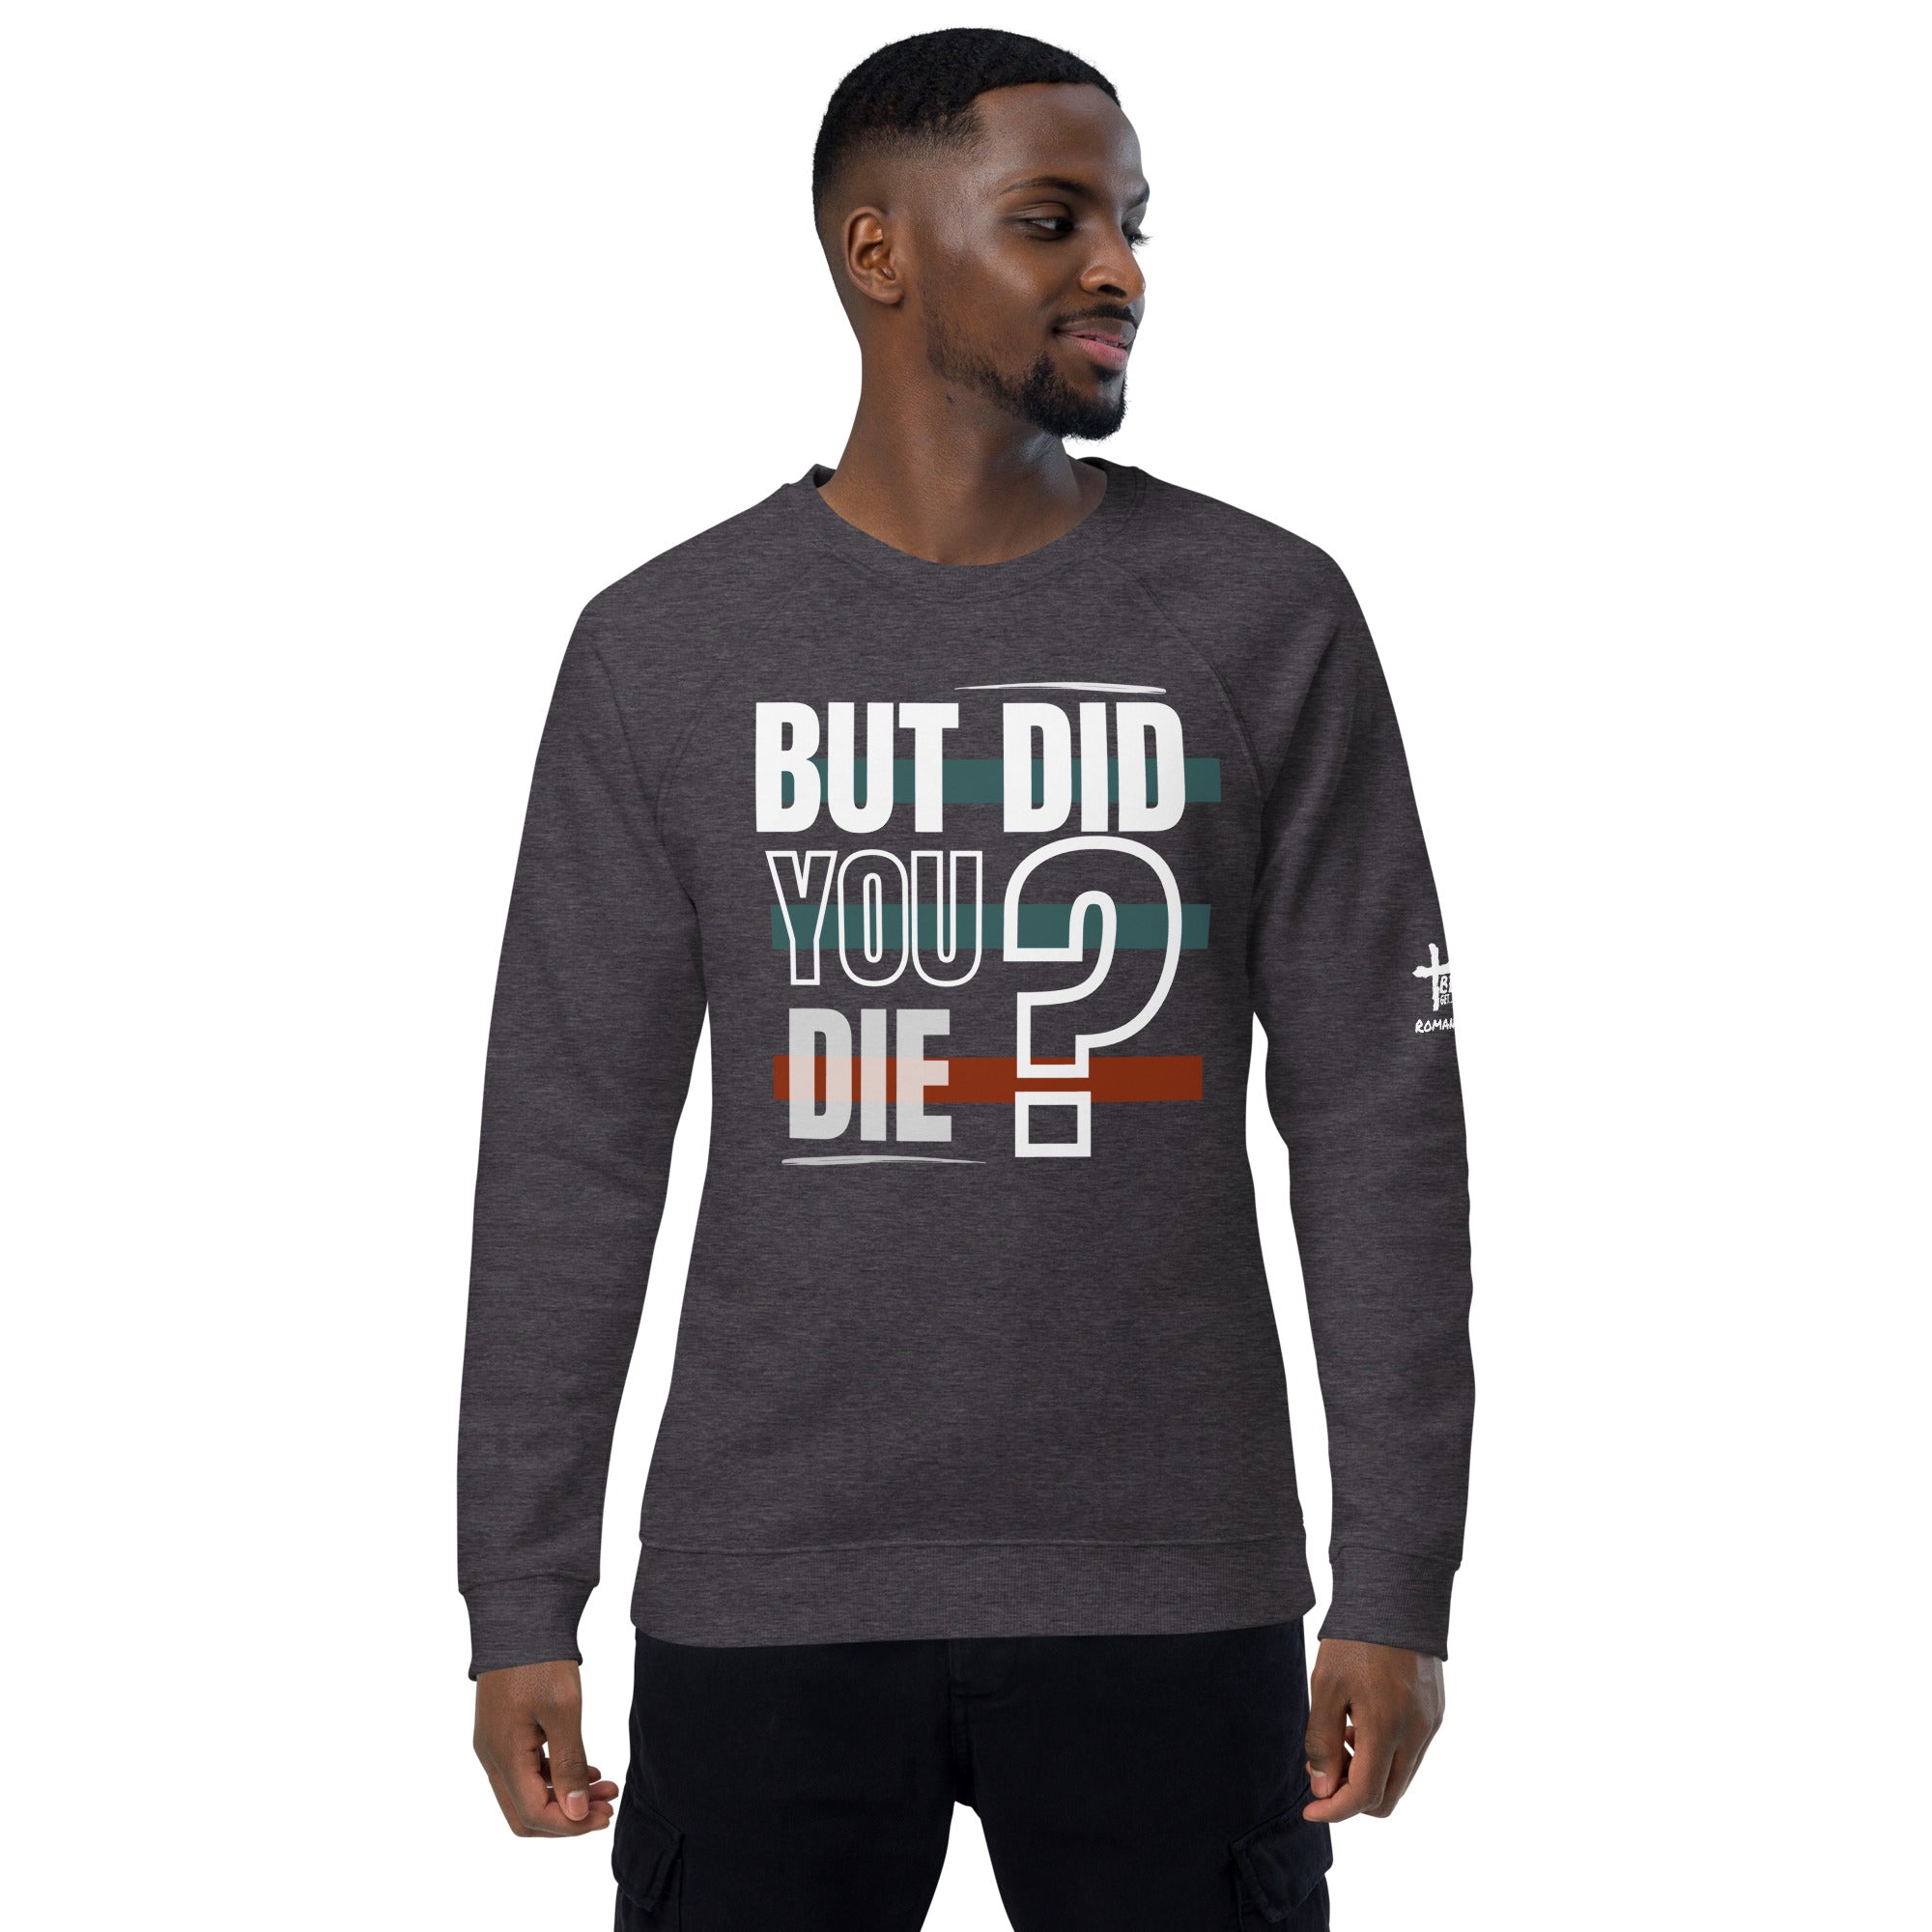 But Did You Die? - Unisex organic raglan sweatshirt | Romans 5:3-4 sweatshirt | Get, Do, Be Better